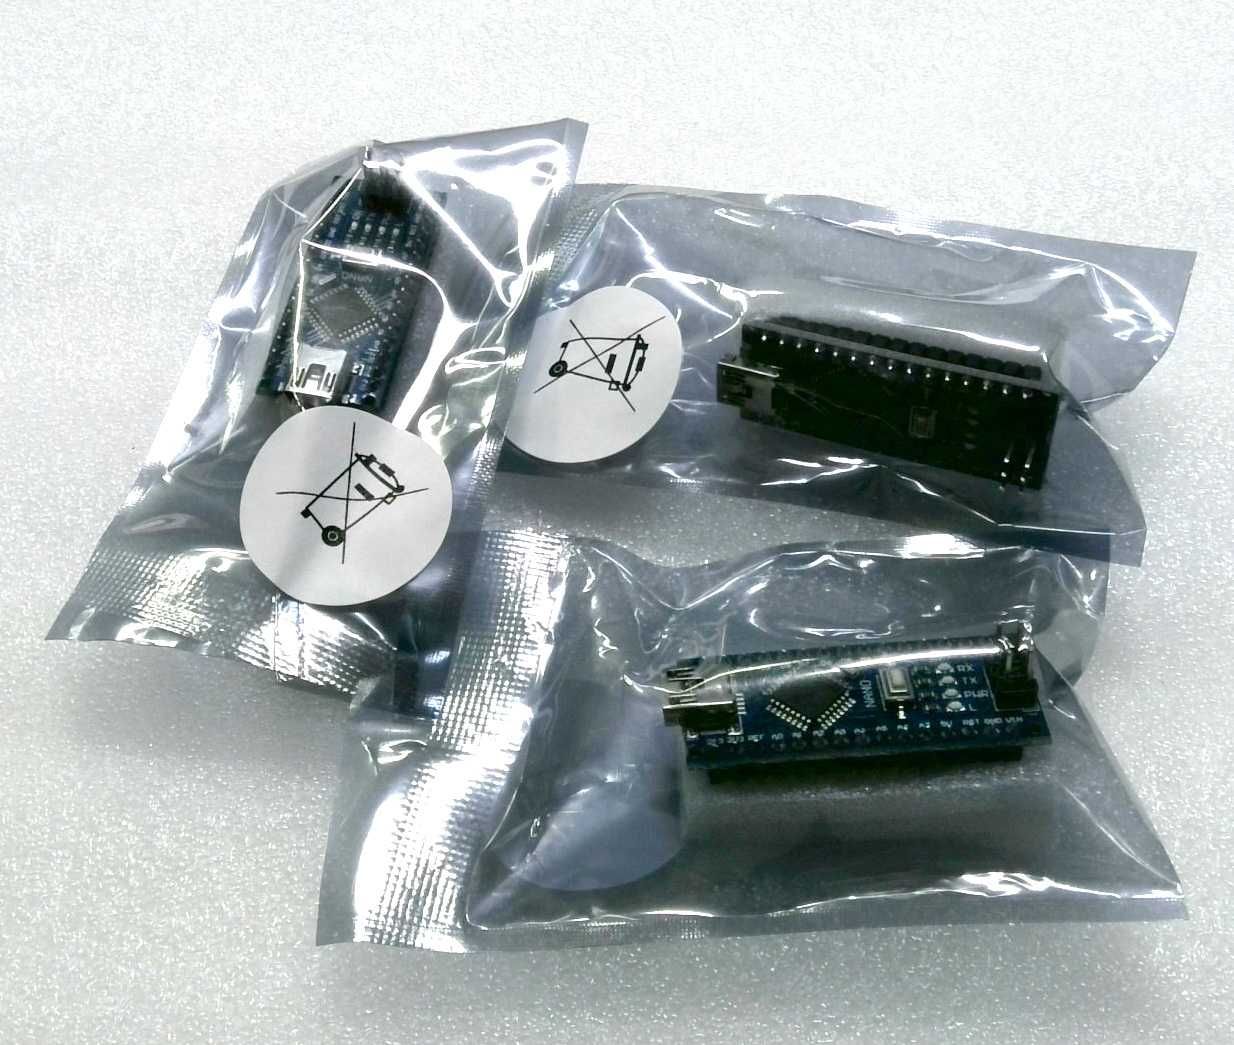 Arduino Nano v3.0 ATmega328P CH340 z USB MINI - zlutowany |STcs|